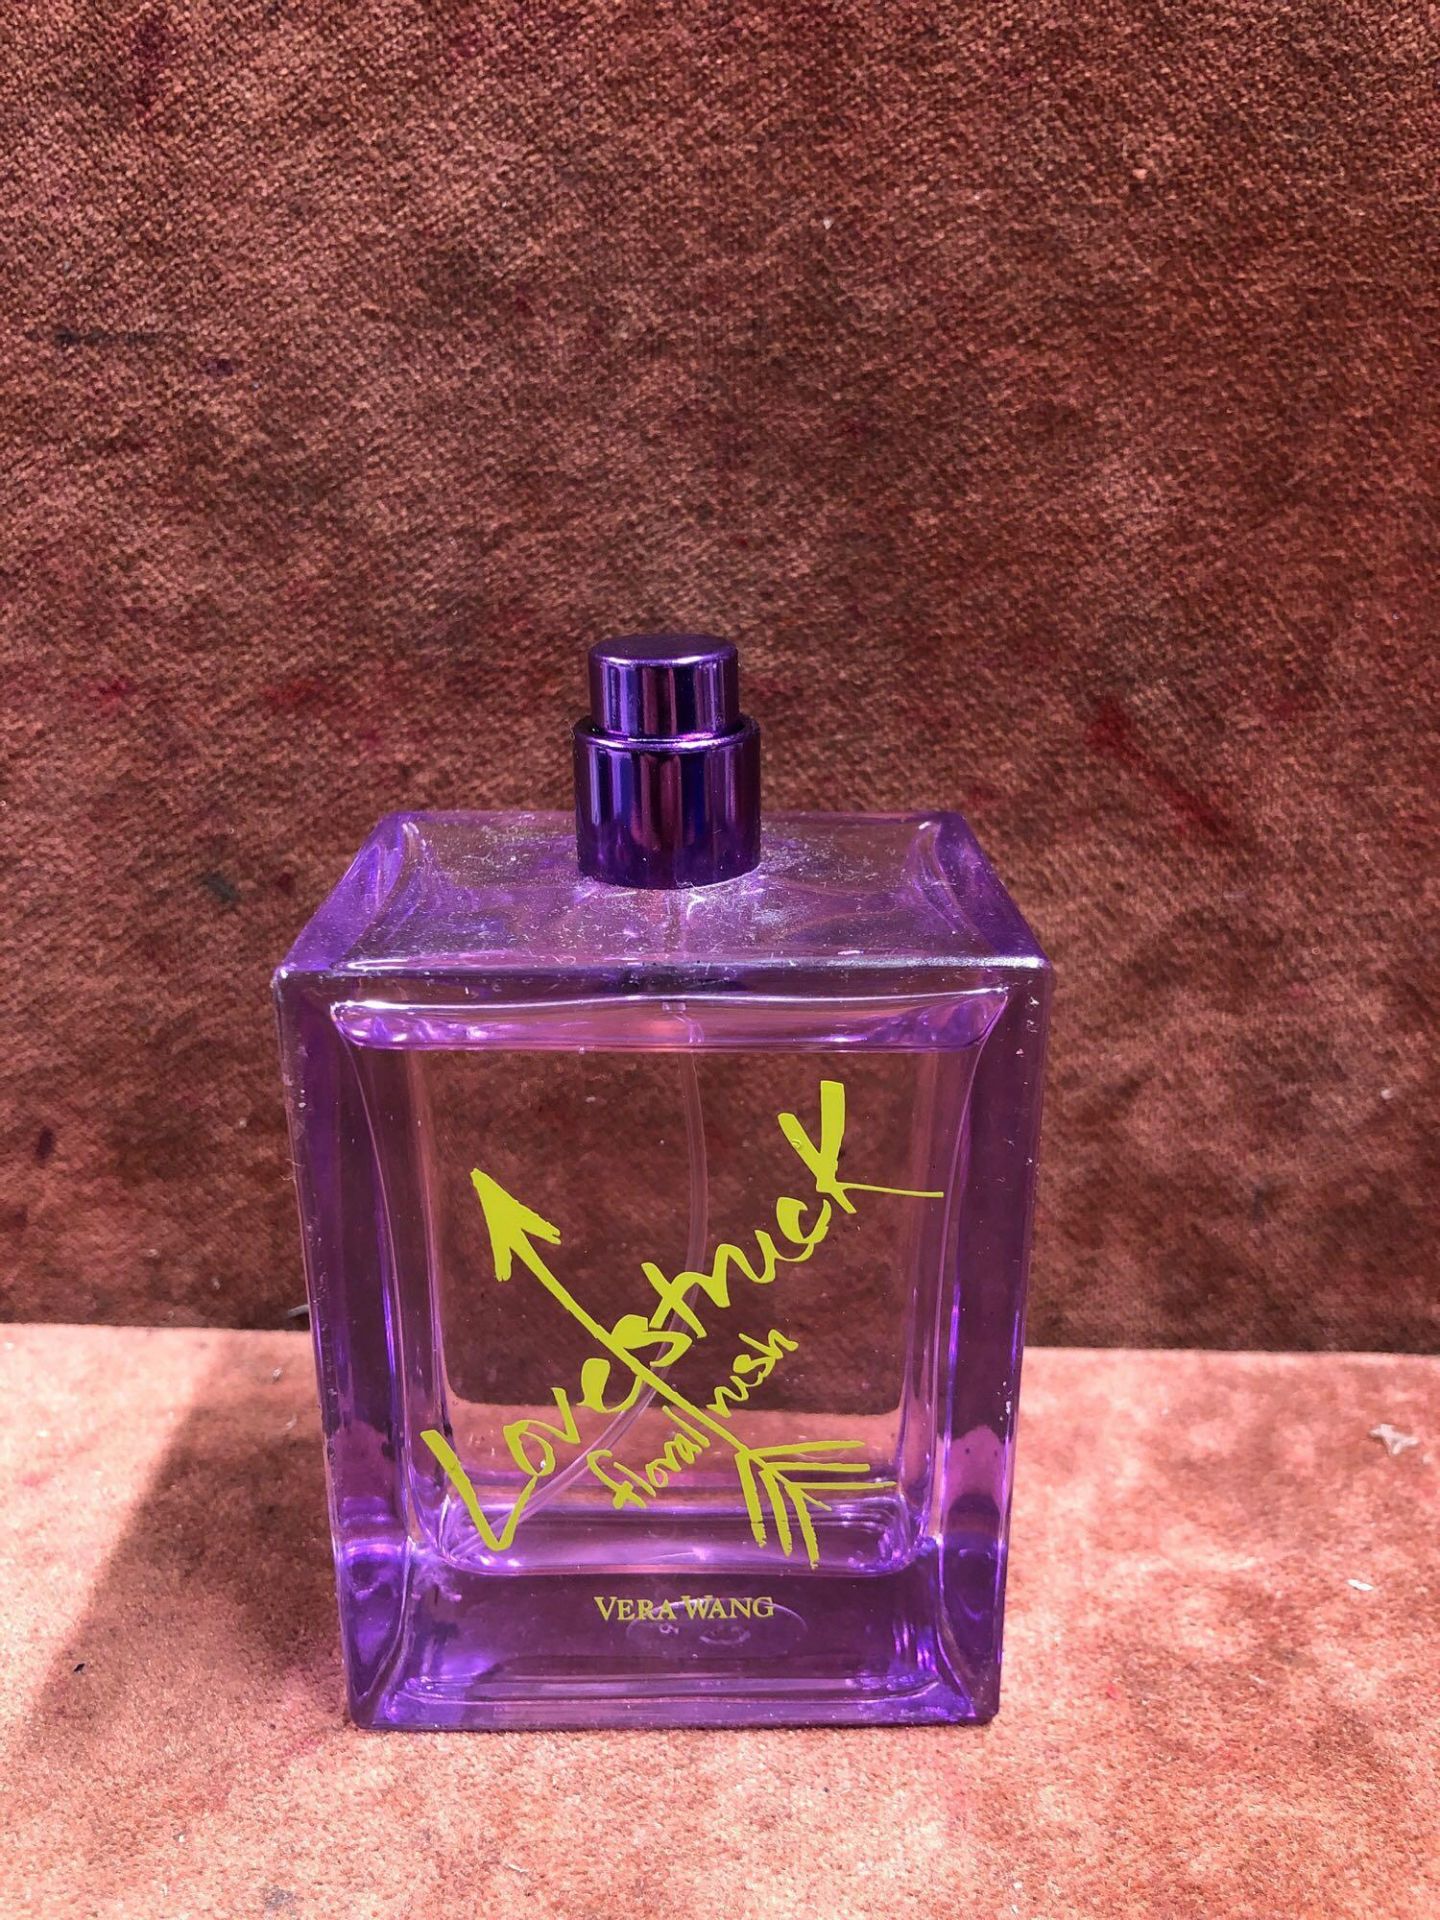 (Ms) RRP £60 Unboxed 100Ml Tester Bottle Of Vera Wang Lovestruck Floral Rush Eau De Parfum Spray Ex-